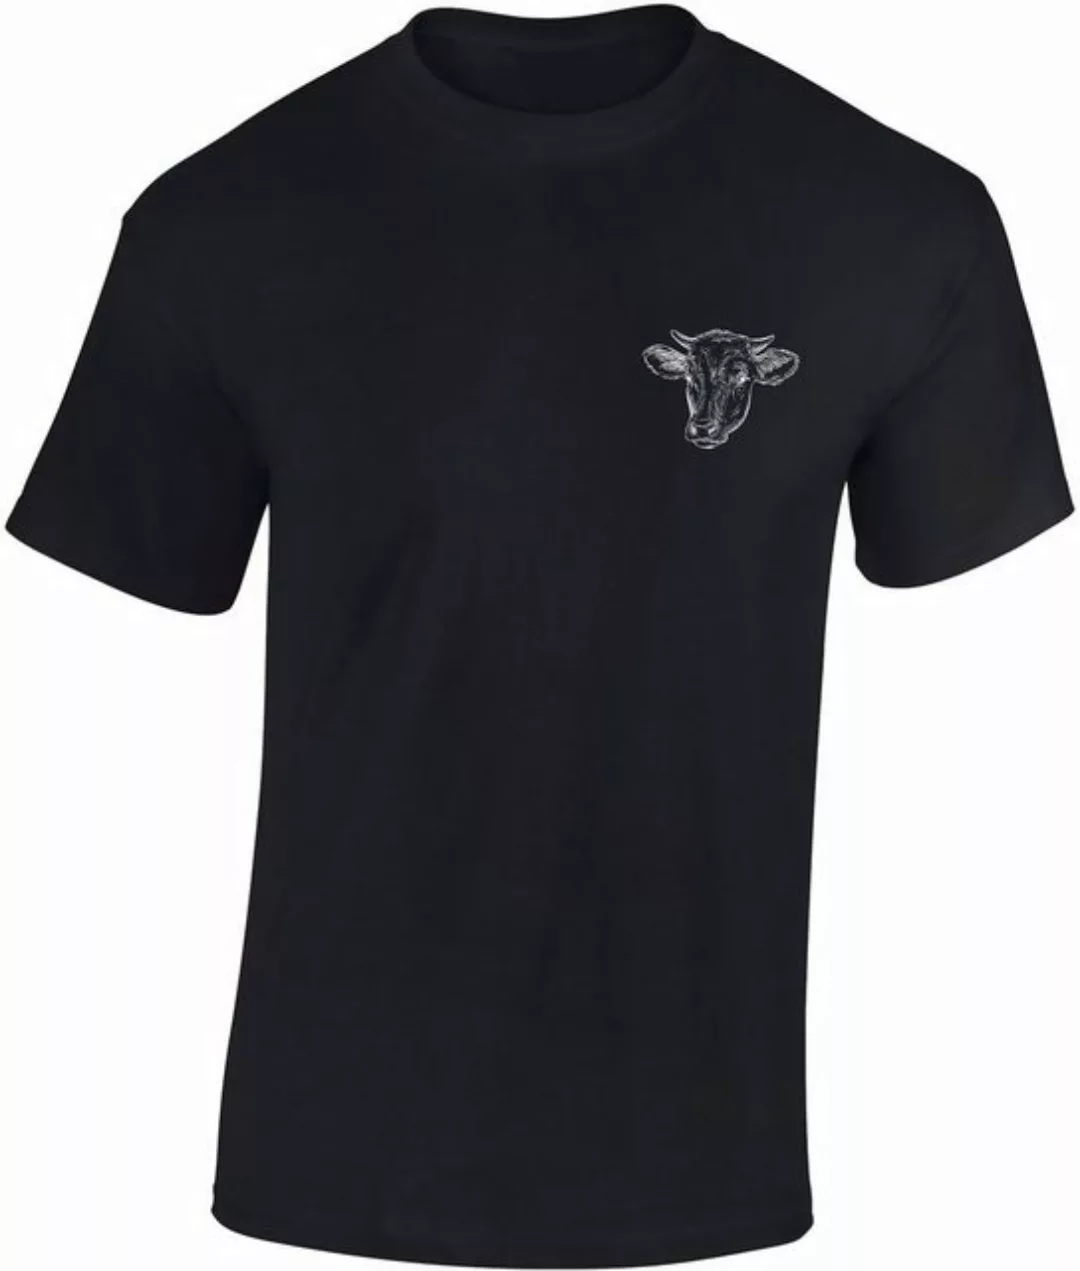 Baddery Print-Shirt Herren T-Shirt - Almstolz - Kuh Shirt Bauer Cowboy Alm günstig online kaufen